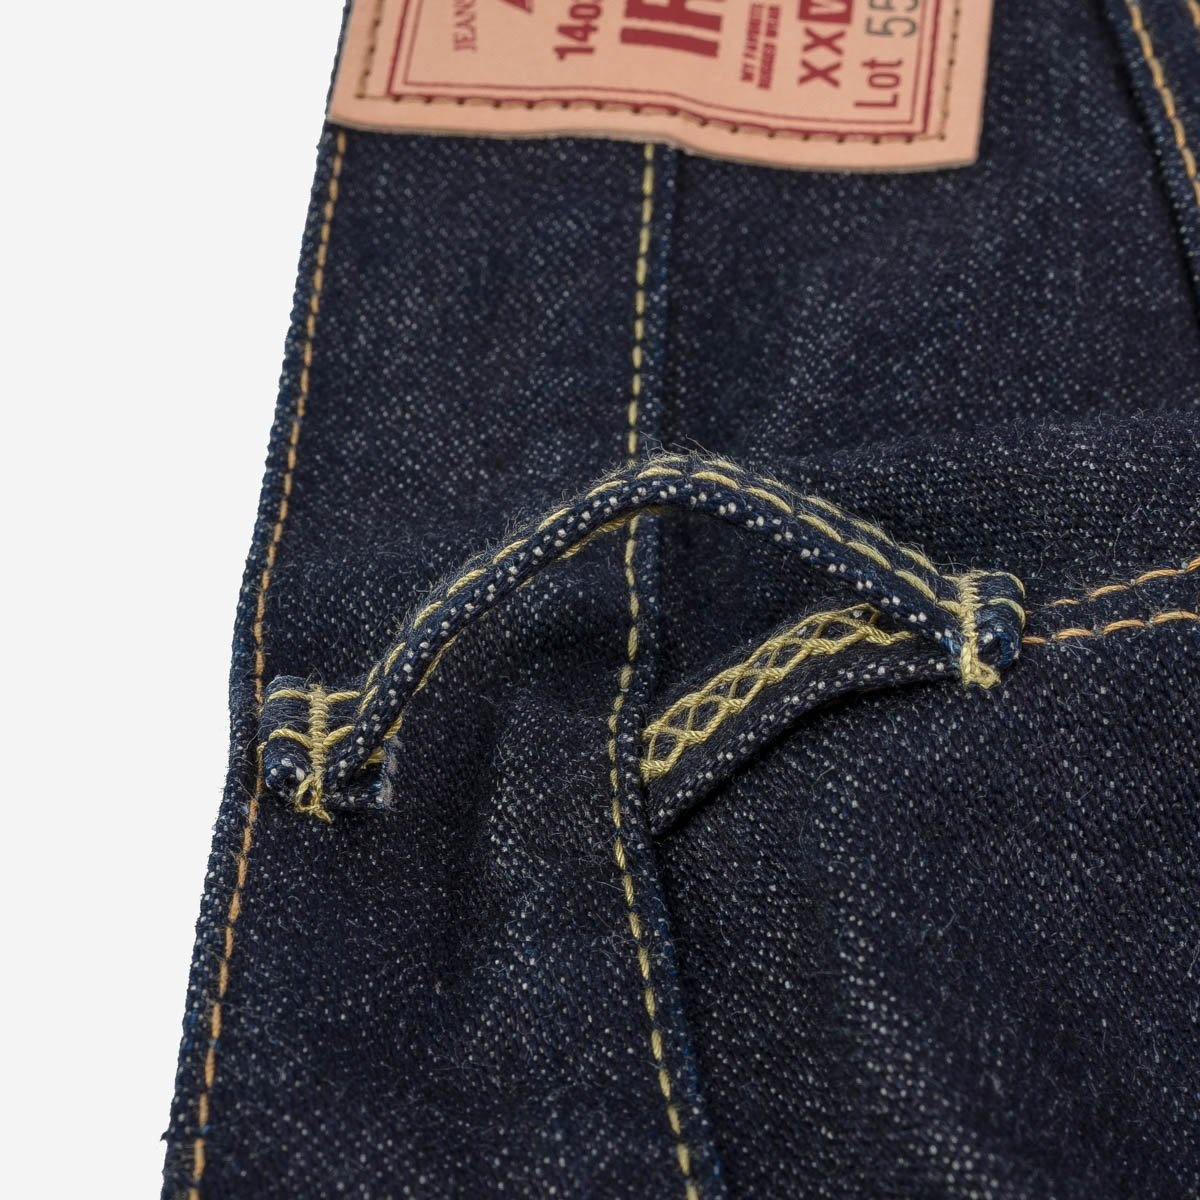 IH-555SBR-14 14oz Broken Twill Selvedge Denim Super Slim Cut Jeans - Indigo - 8